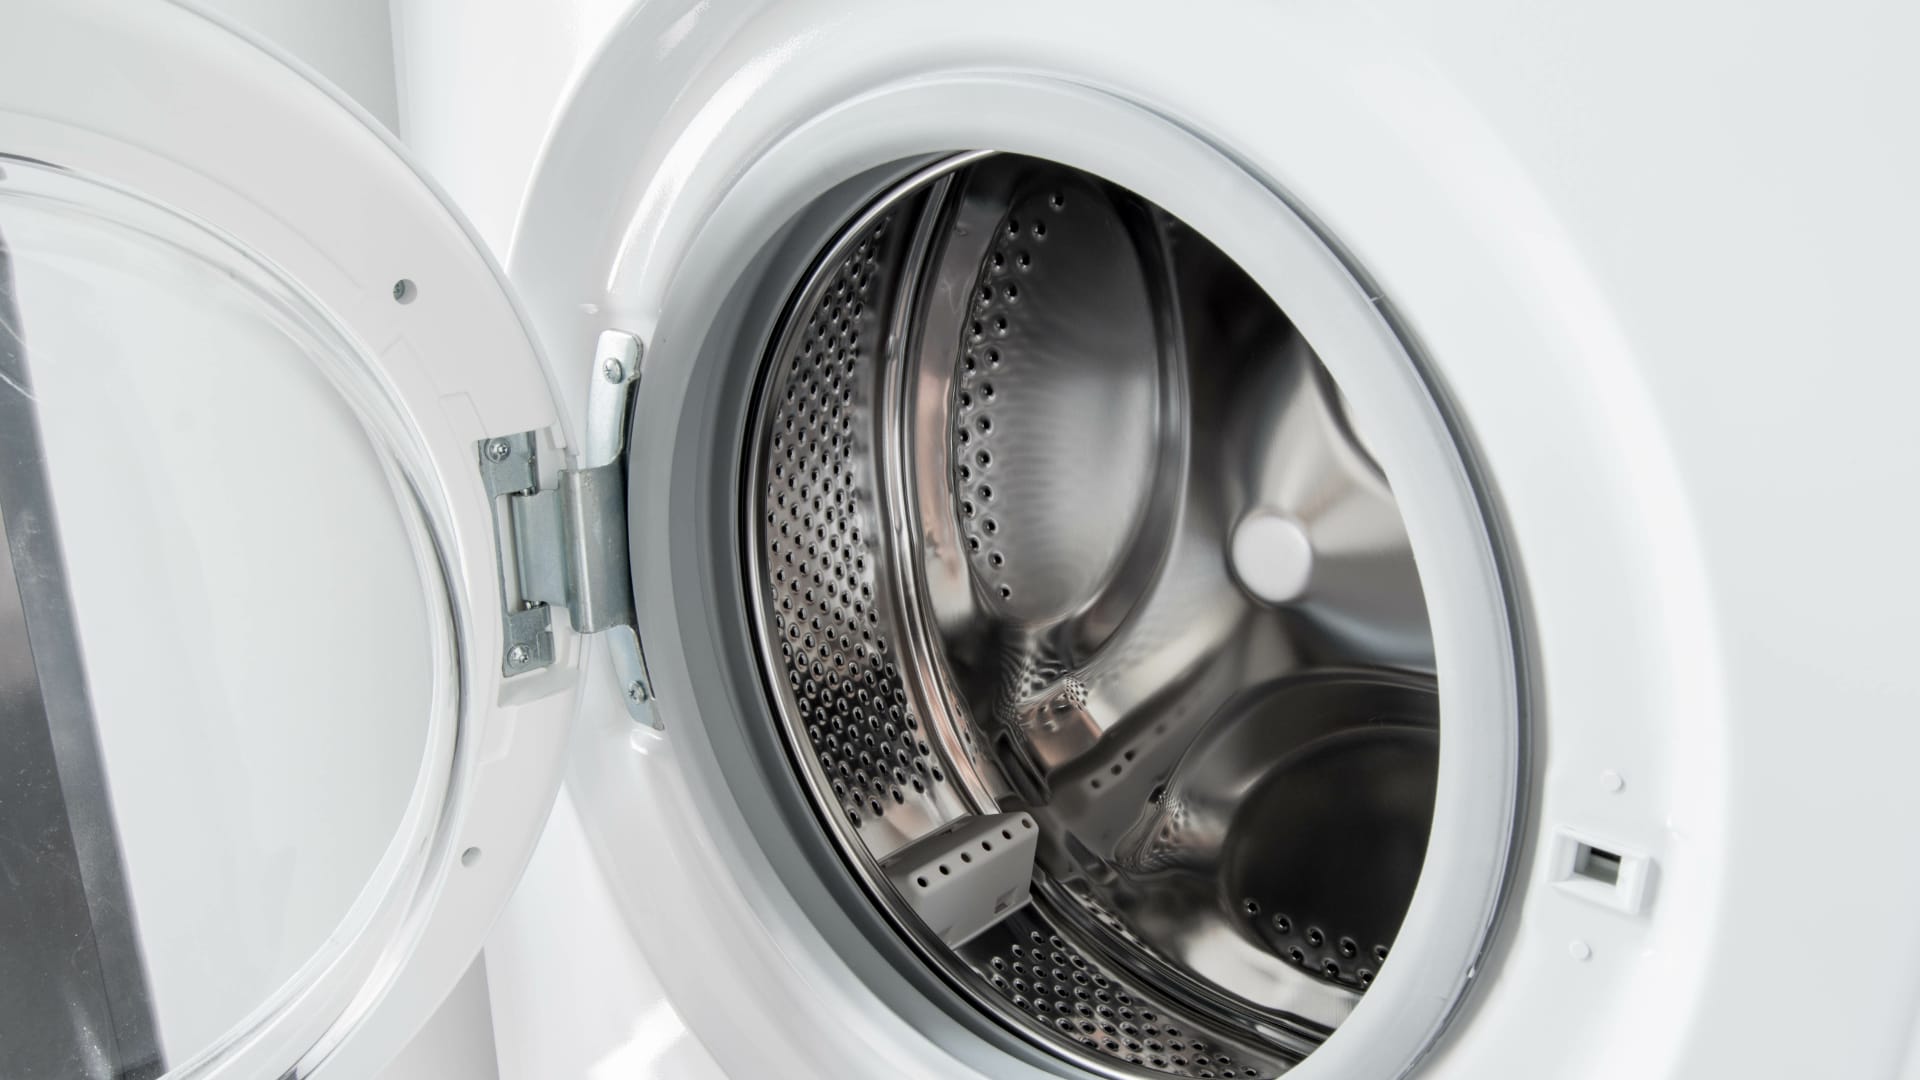 Featured image for “LG Washing Machine OE Error Code Explained”